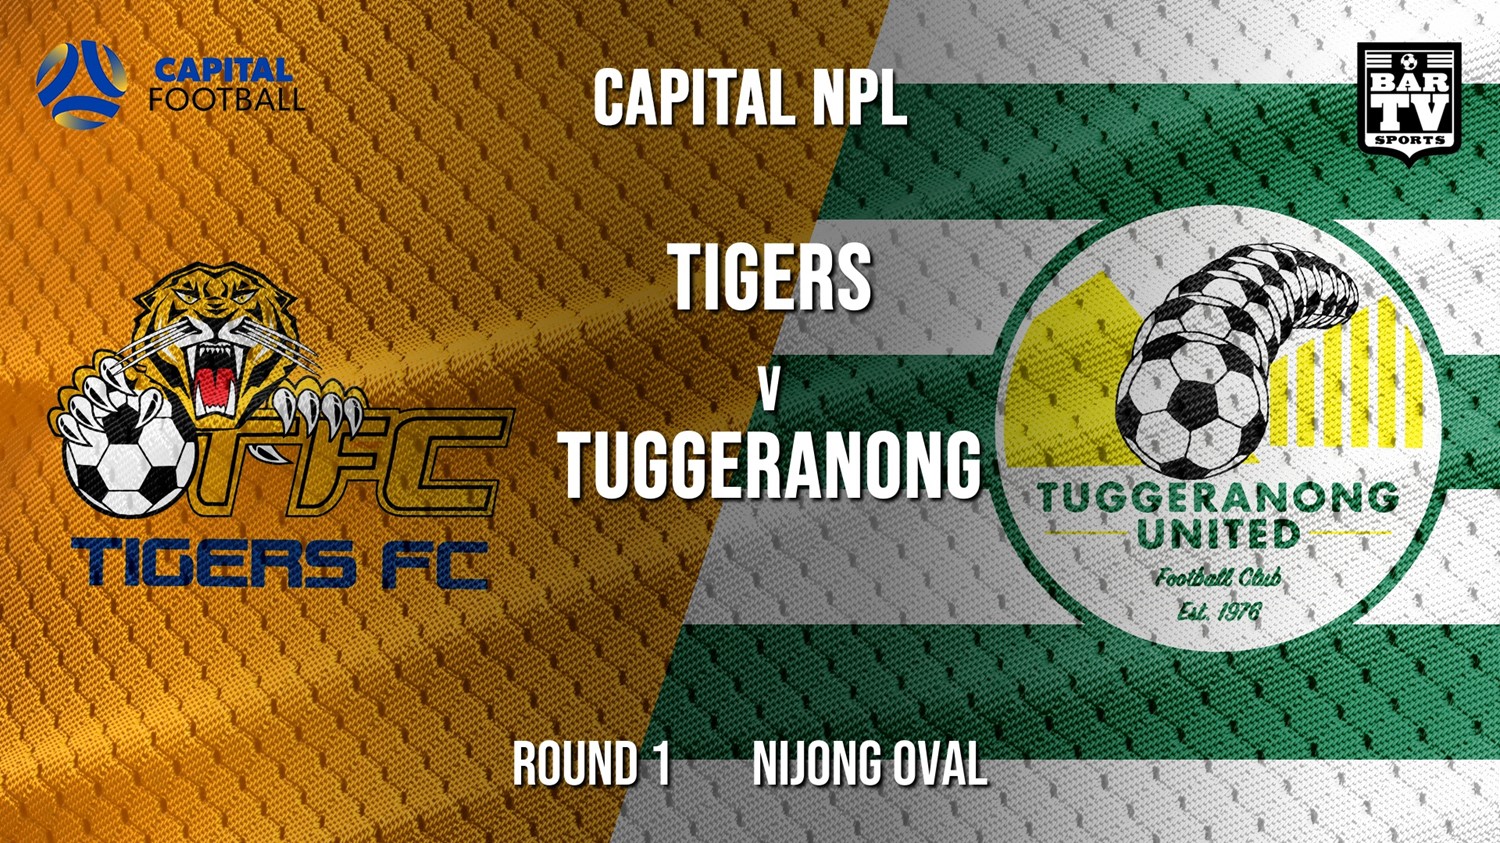 NPL - Capital Round 1 - Tigers FC v Tuggeranong United FC Minigame Slate Image